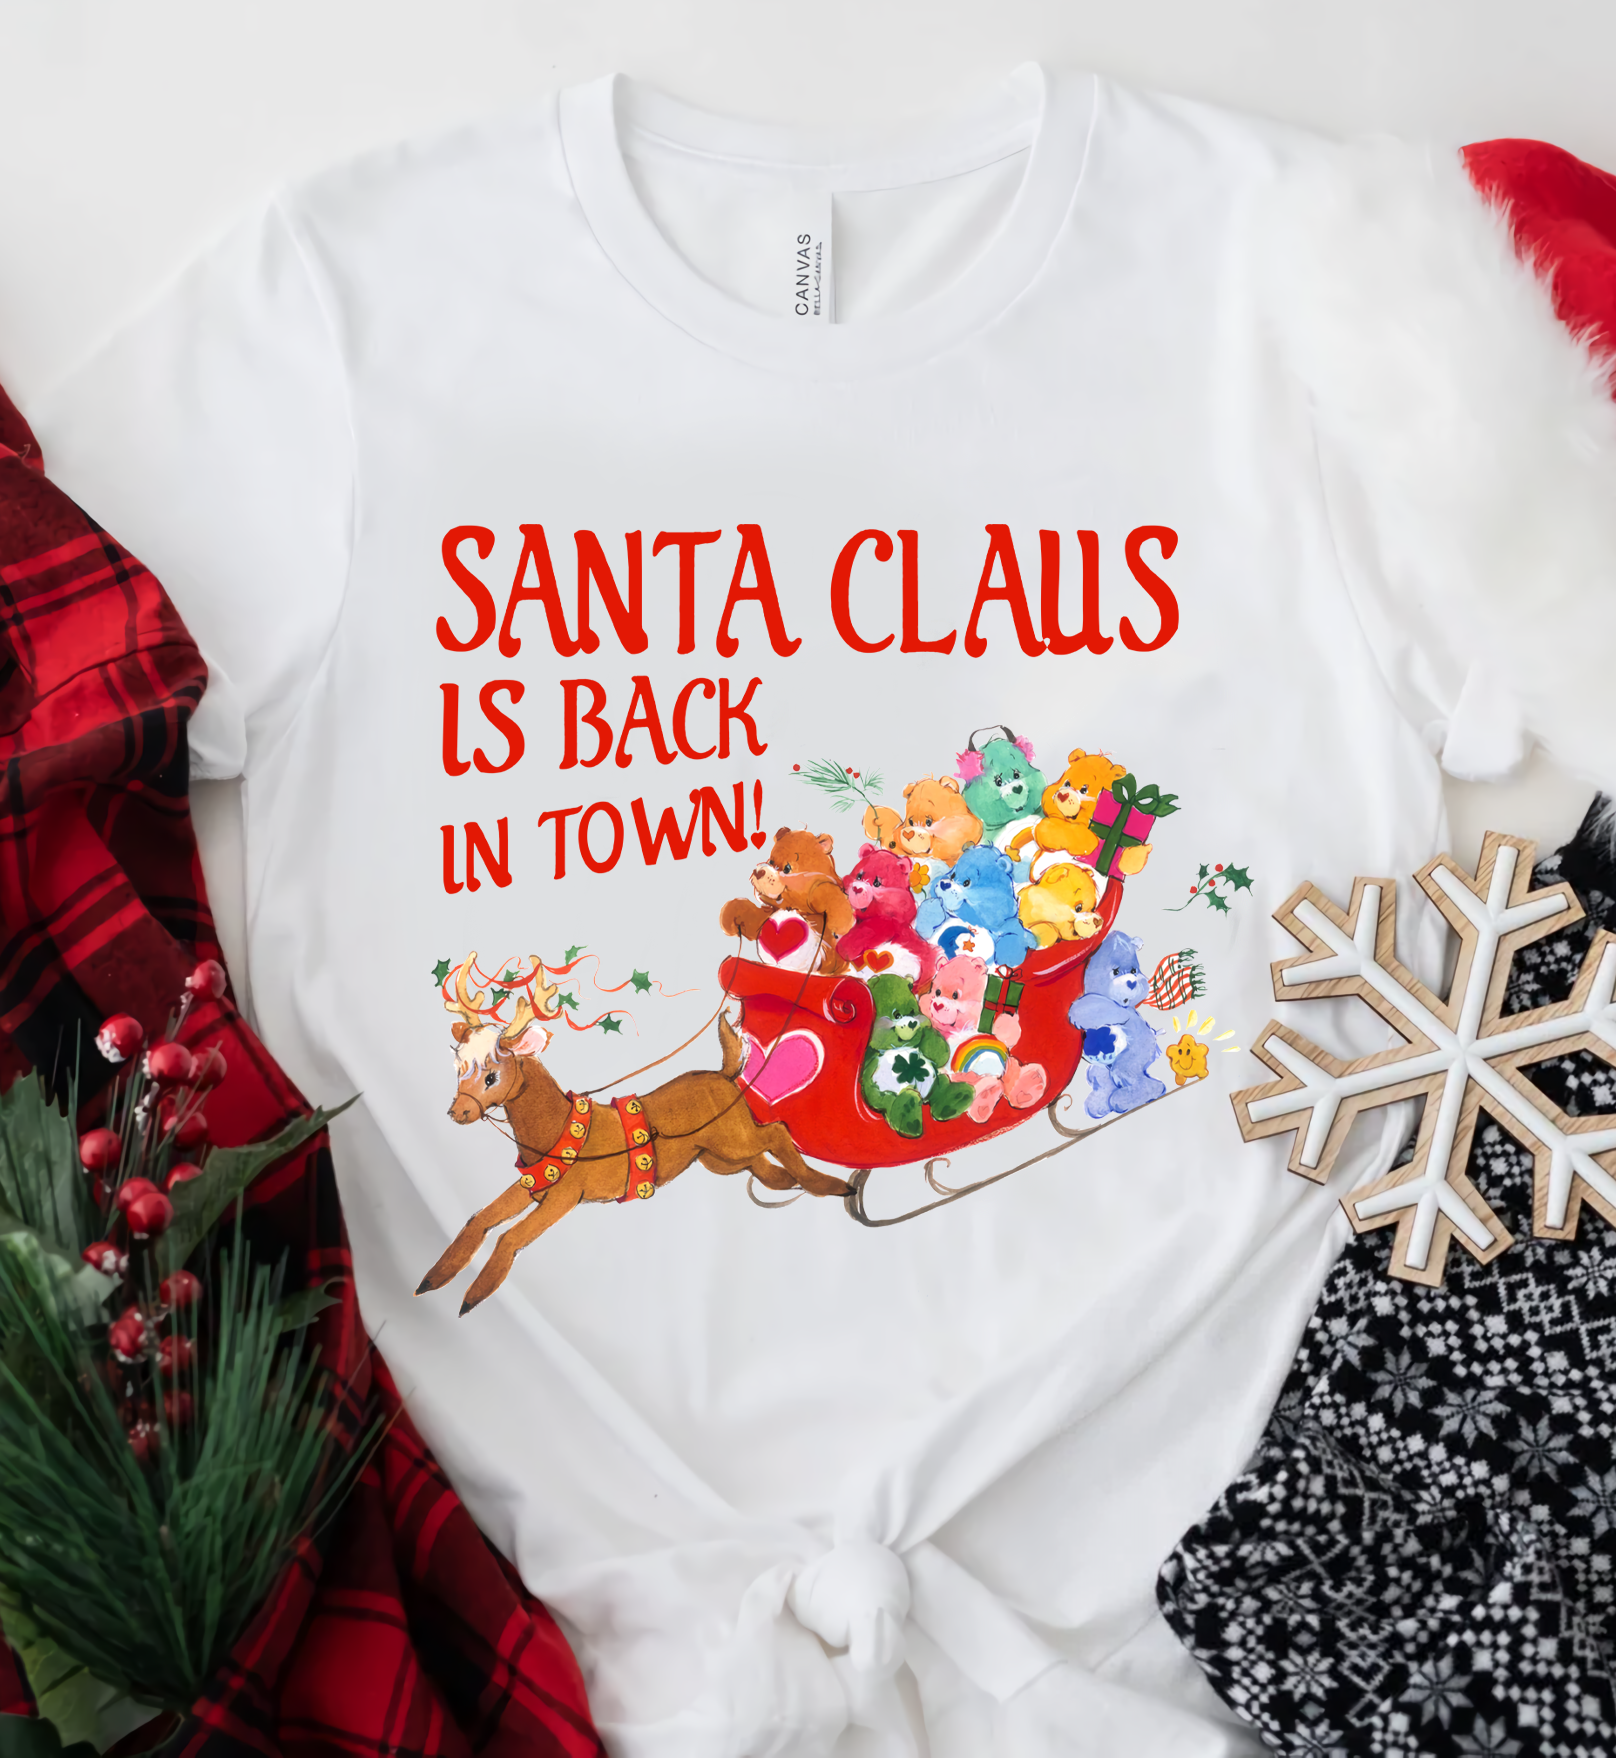 Care Bears Christmas Shirt, Vintage Care Bears Sweatshirt, 80s Cartoon Christmas Shirt, Care Bears Shirt, Christmas Shirt, Holiday Gifts